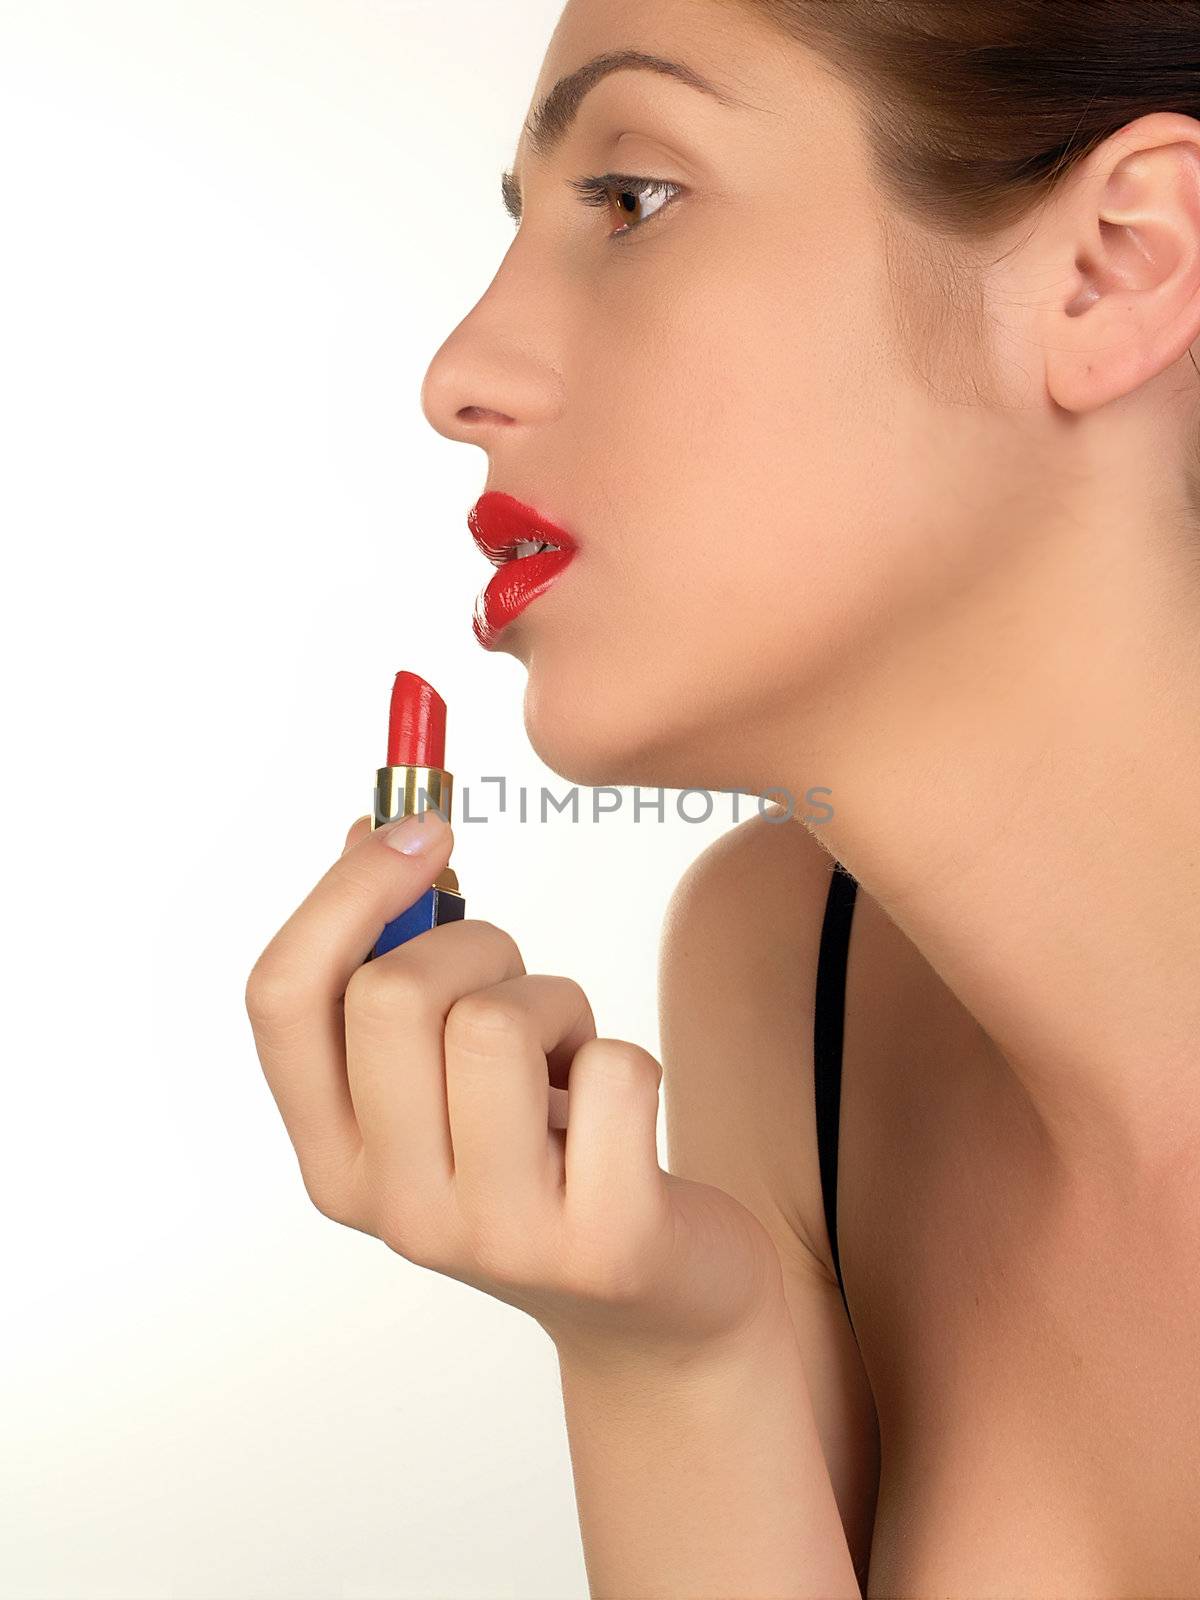 Lipstick in Hand, Closeup by adamr